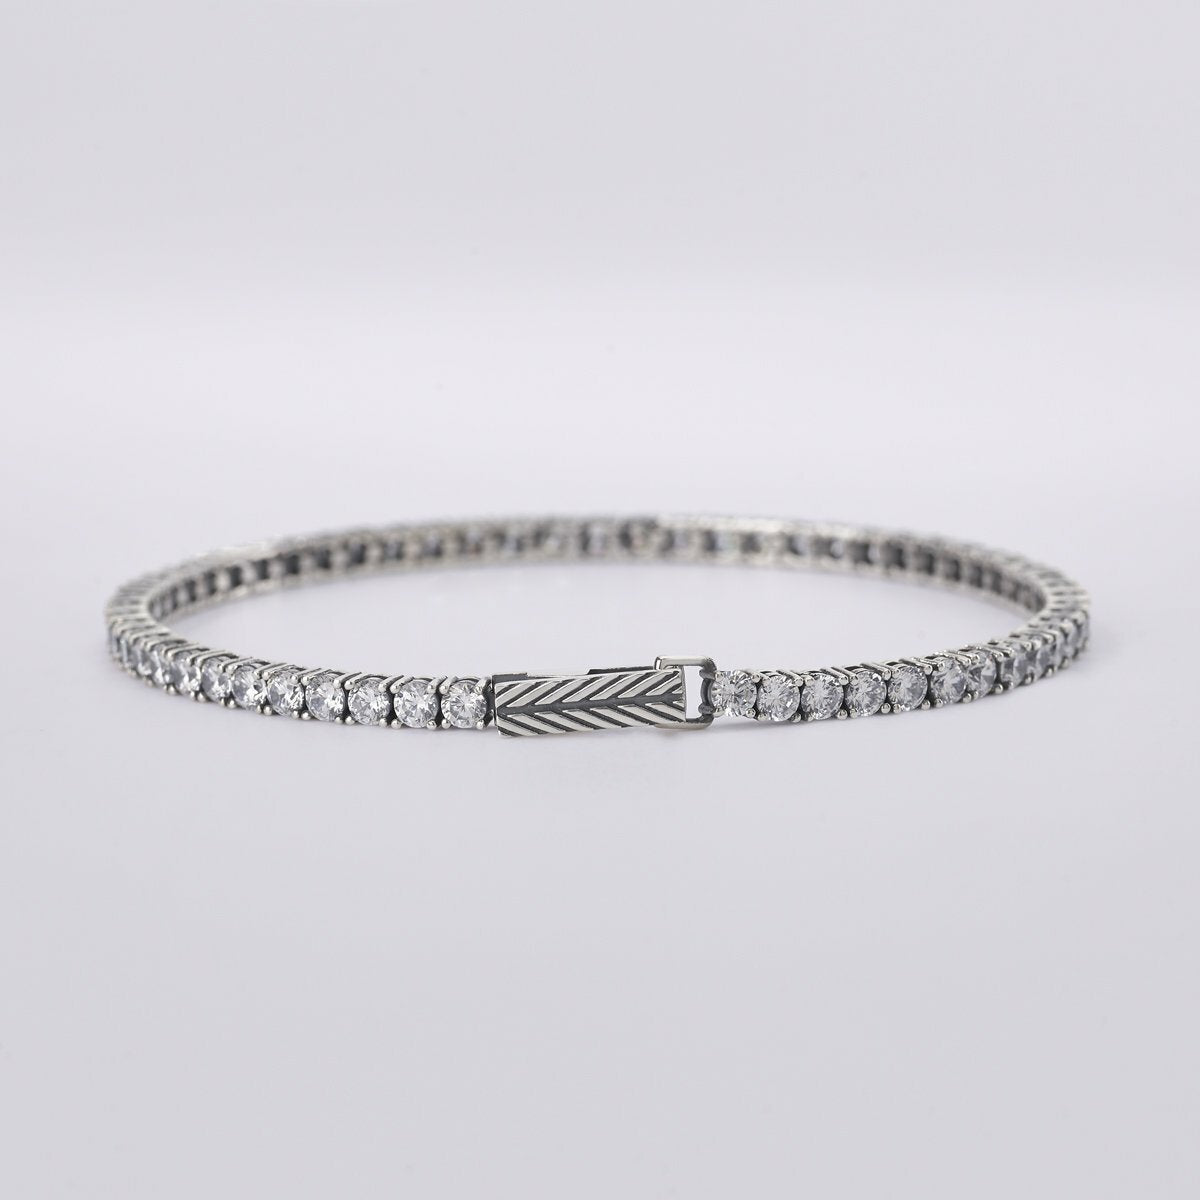 Men's Tennis Bracelet in silver Mabina Gioielli 533436-M